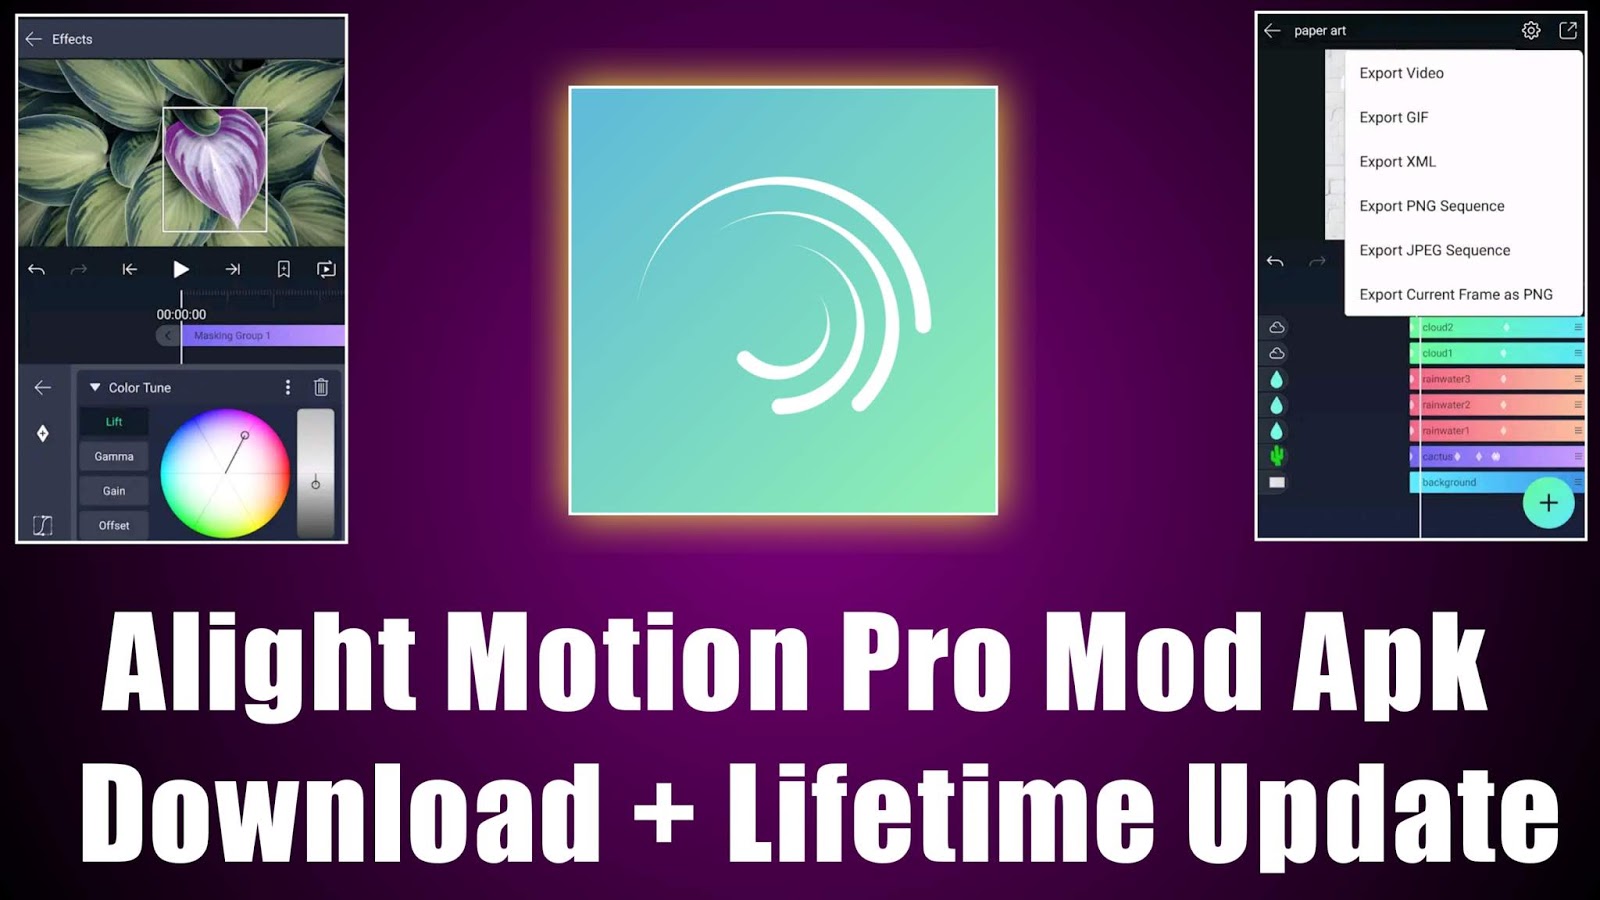 Alight Motion 3.1.4 latest version mod apk download + No watermark